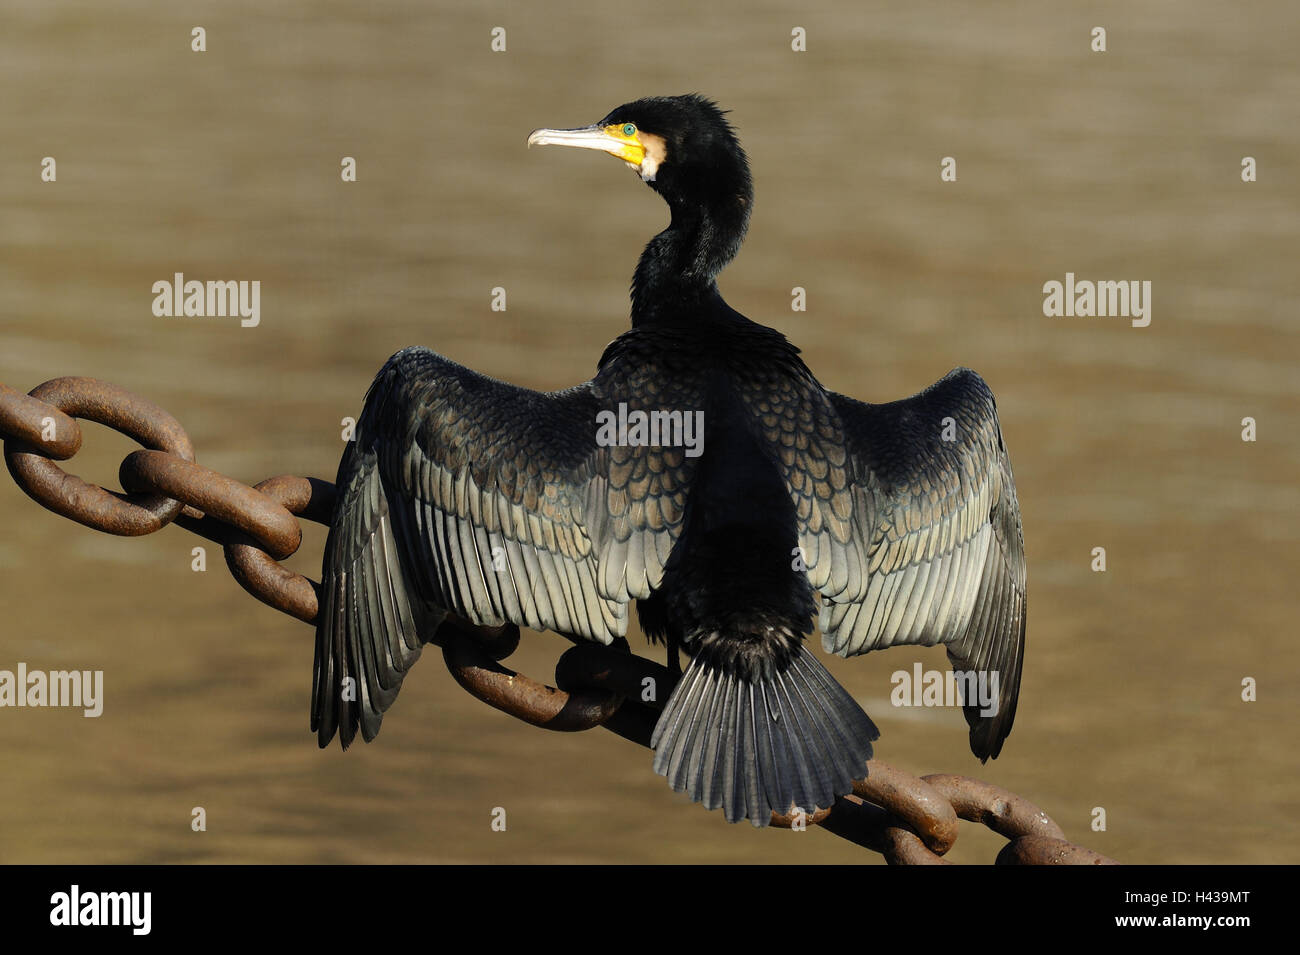 Cormorant, Phalacrocorax carbo, catena, sit, back view, Stock Photo